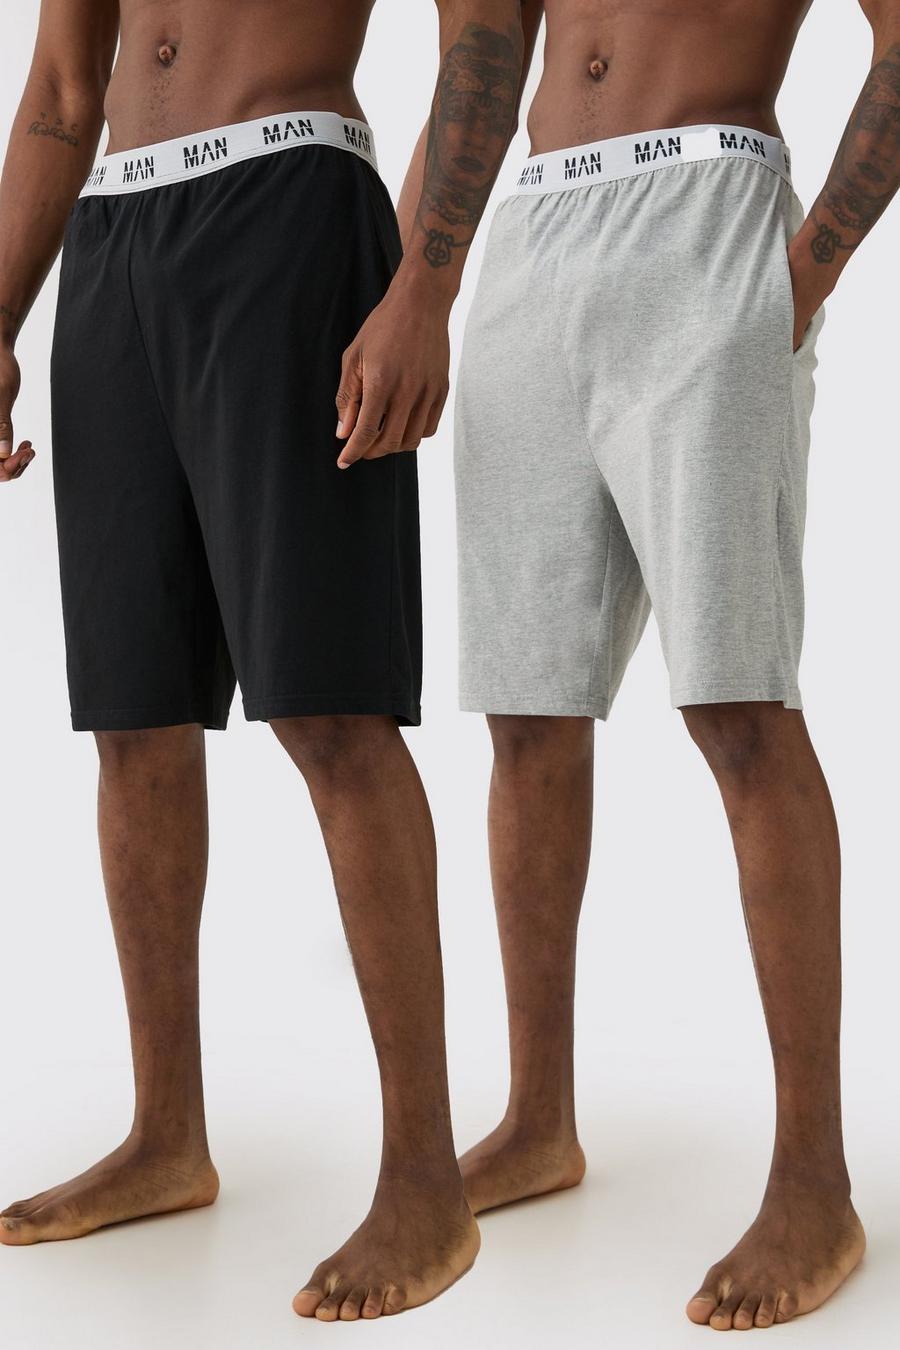 Multi Tall 2 Pack Man Loungewear Shorts